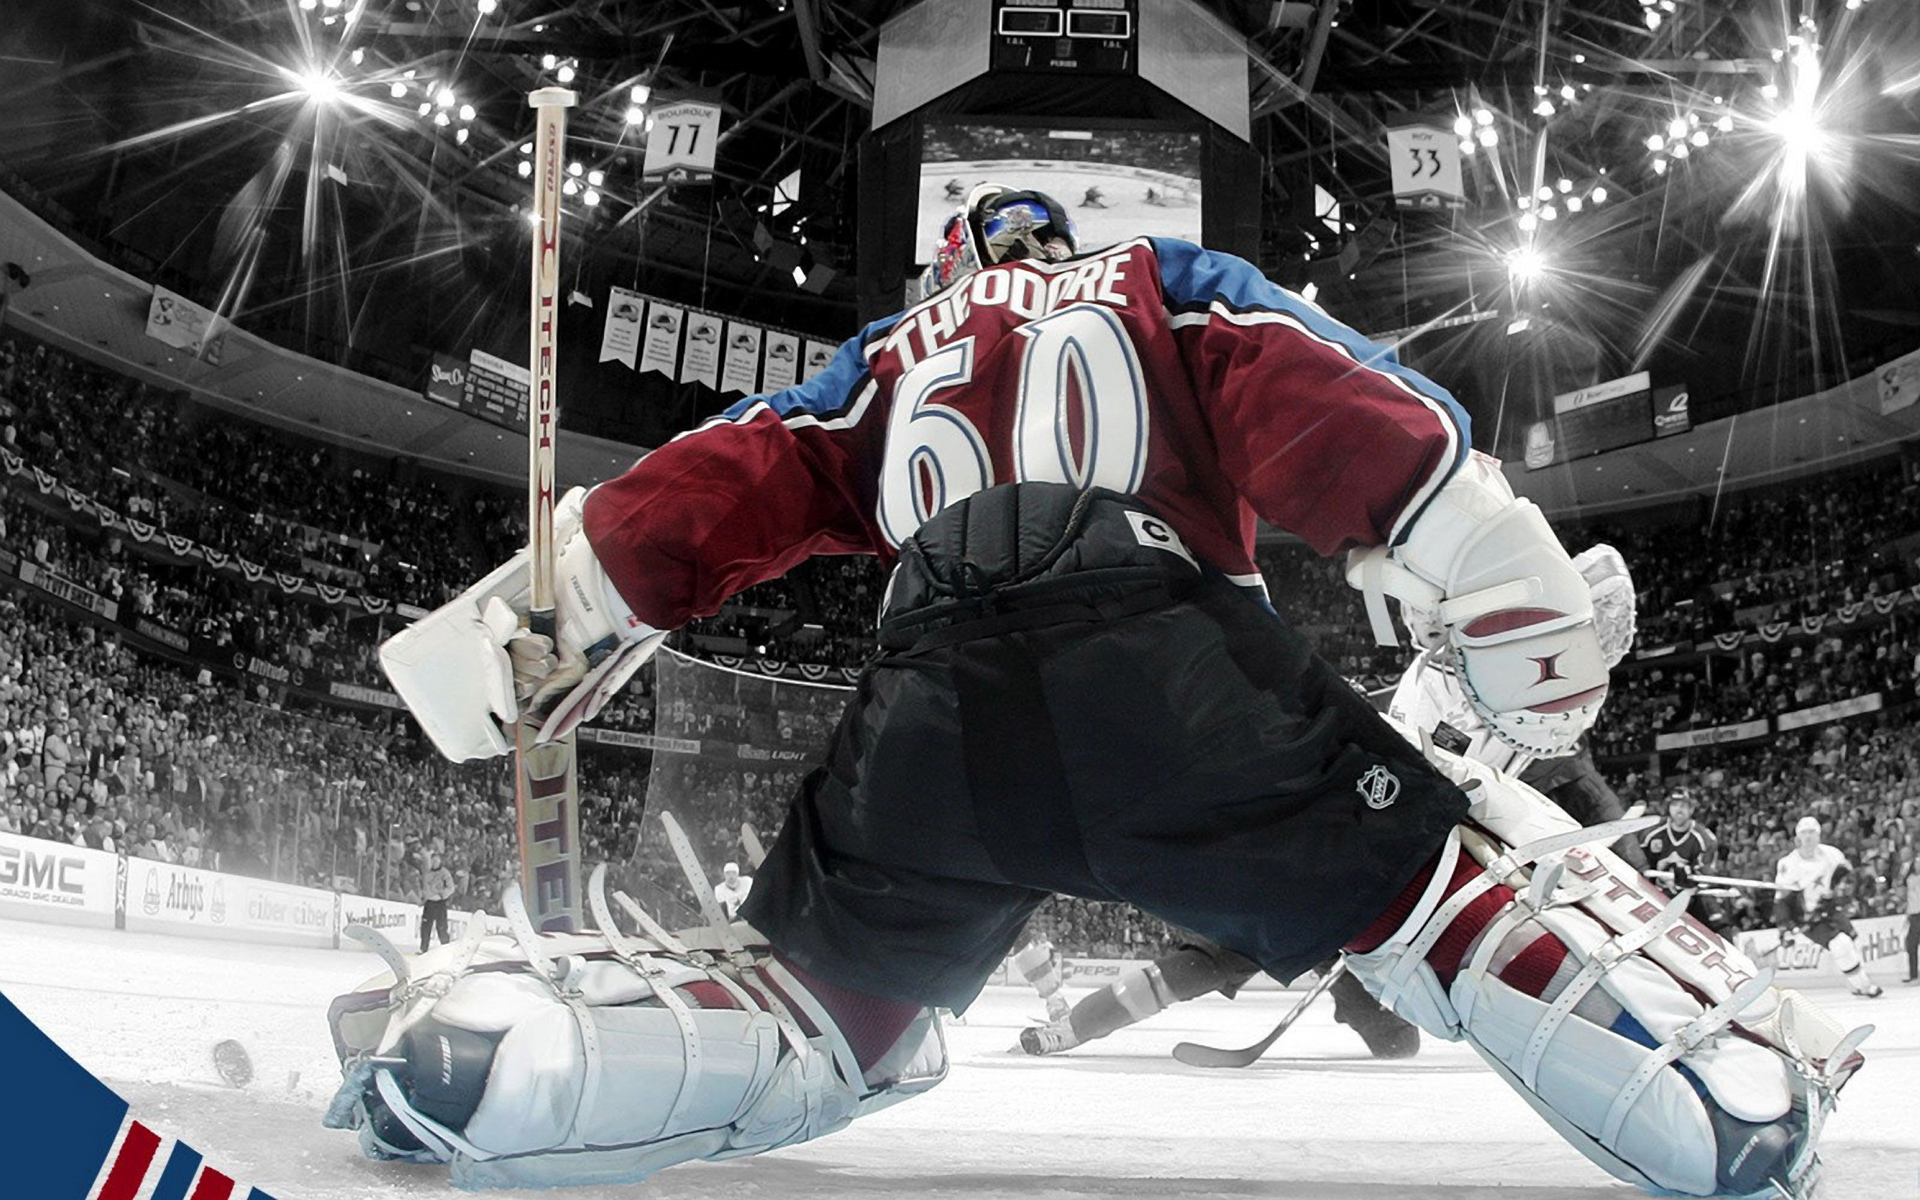 HD Hockey Wallpaper And Photos Sports